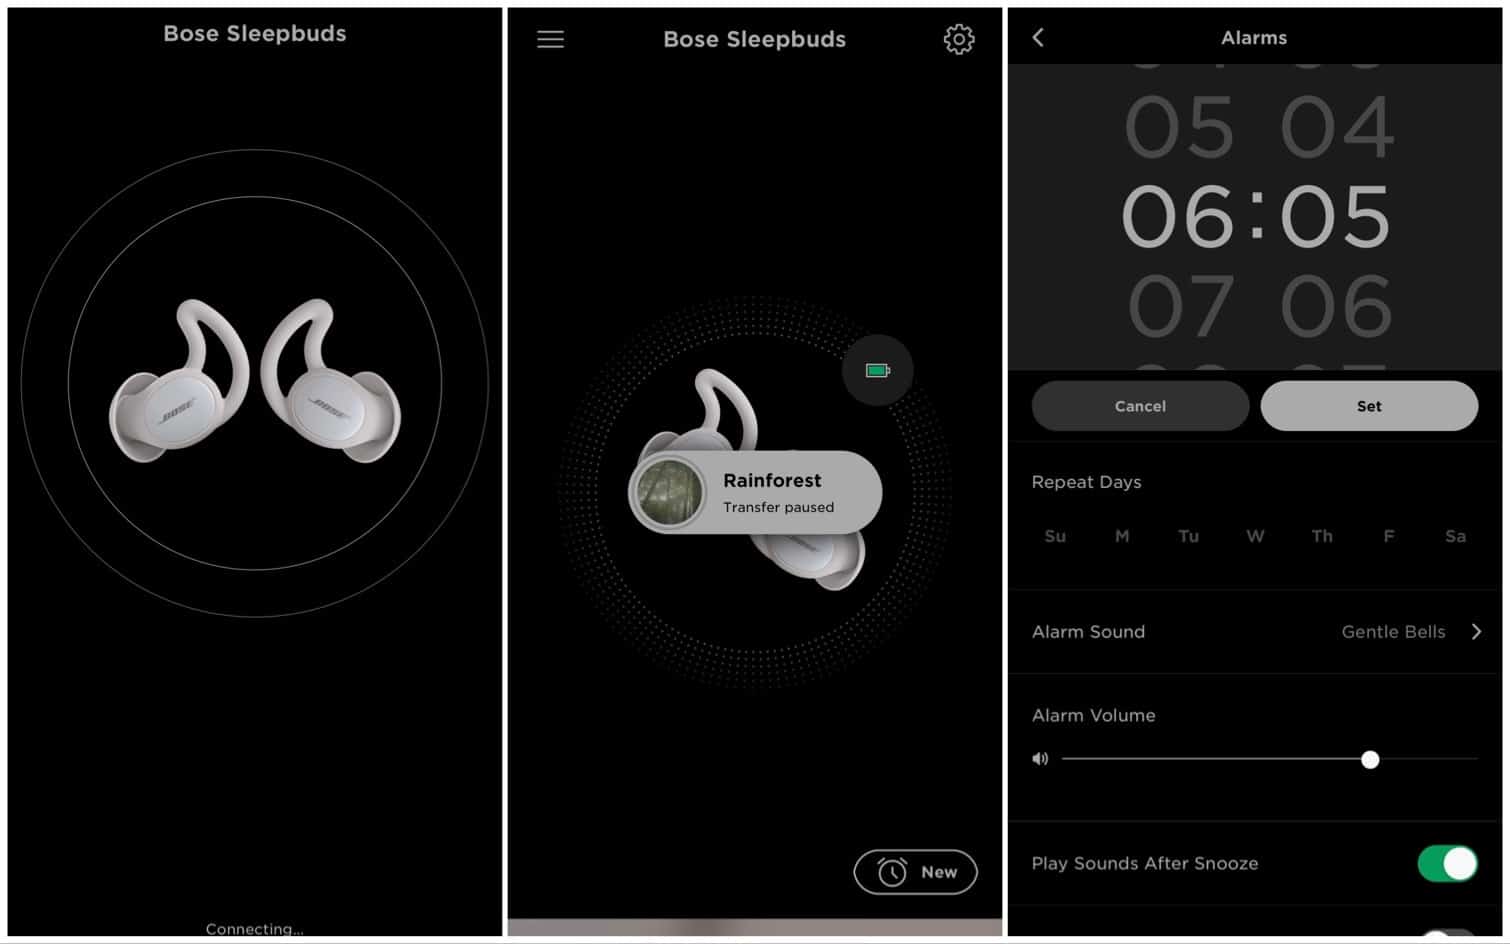 Bose Sleep app